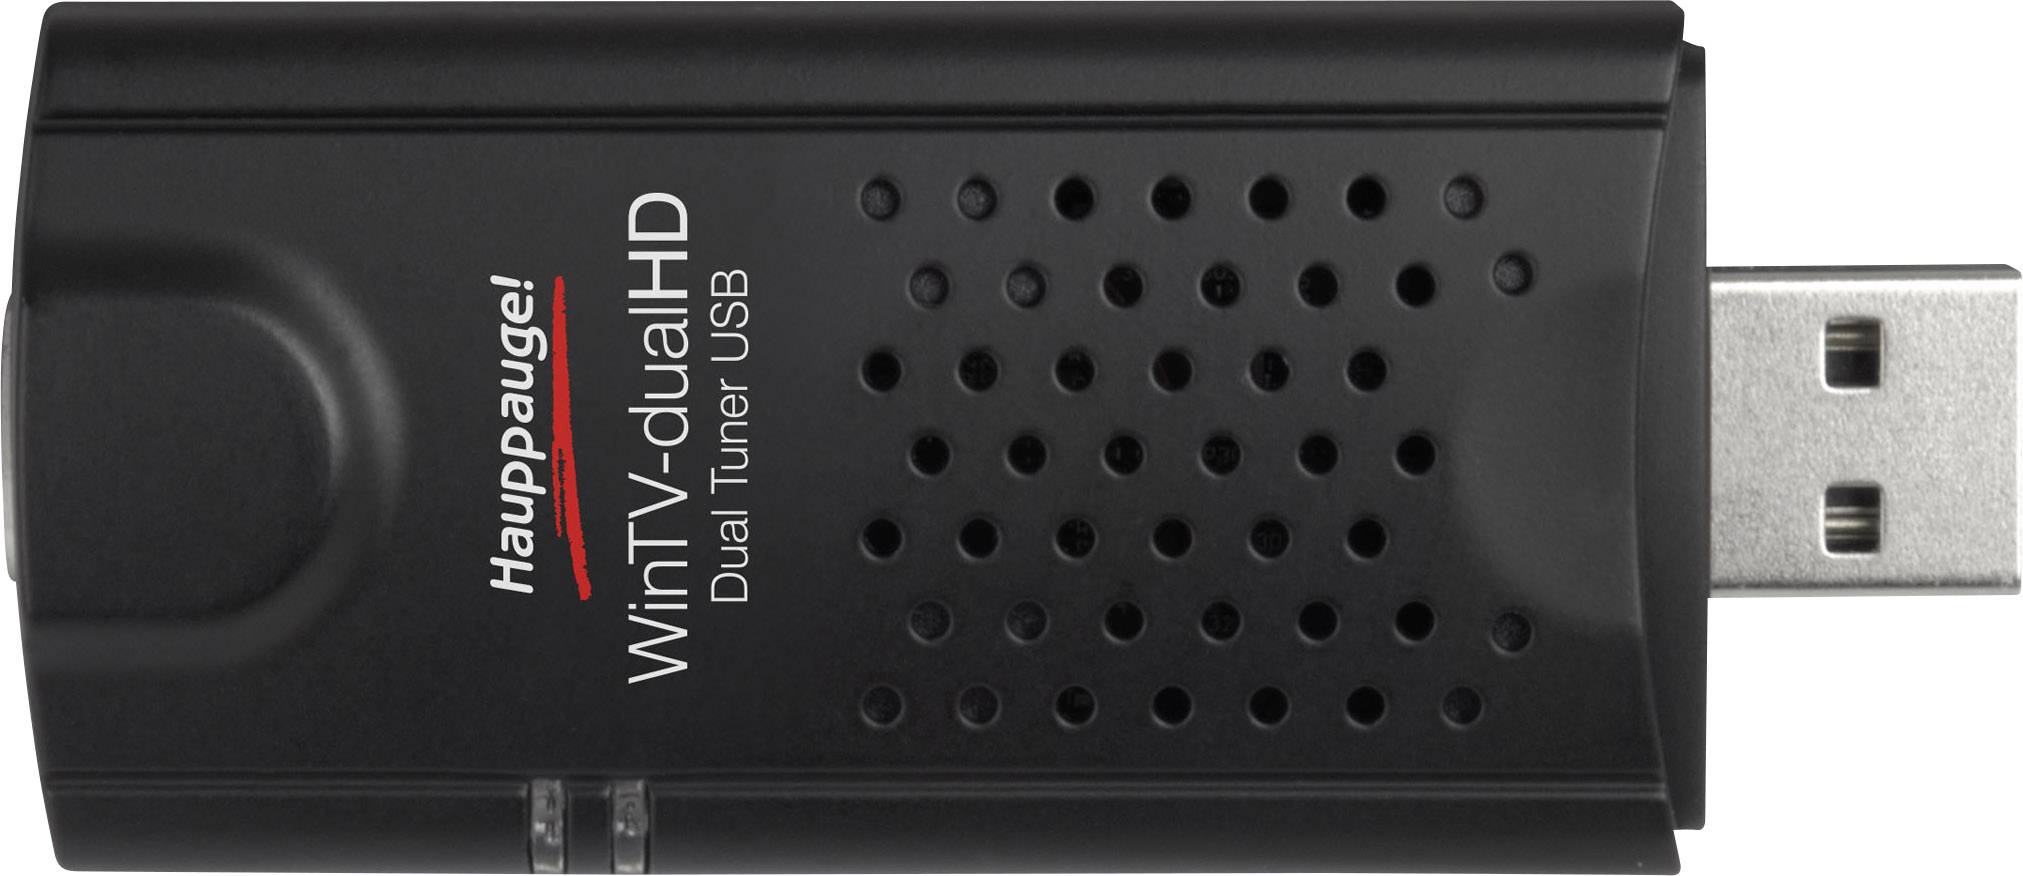 padle upassende aflange Hauppauge WinTV-dualHD TV stick incl. remote control No. of tuners: 2 |  Conrad.com